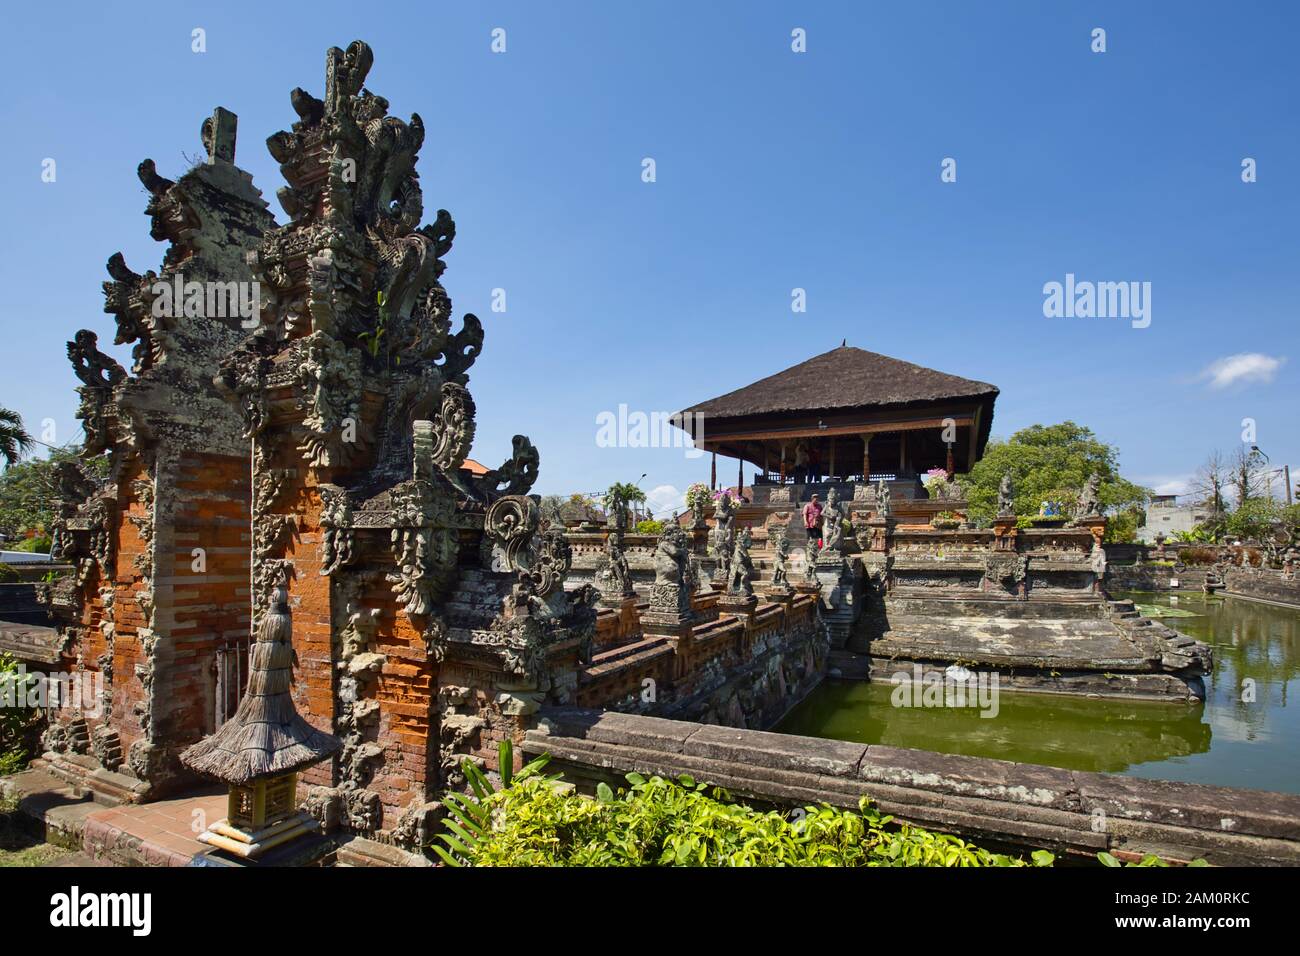 Bale Kambang or Floating Pavilion of Klungkung Palace in Semarapura, Bali, Indonesia Stock Photo